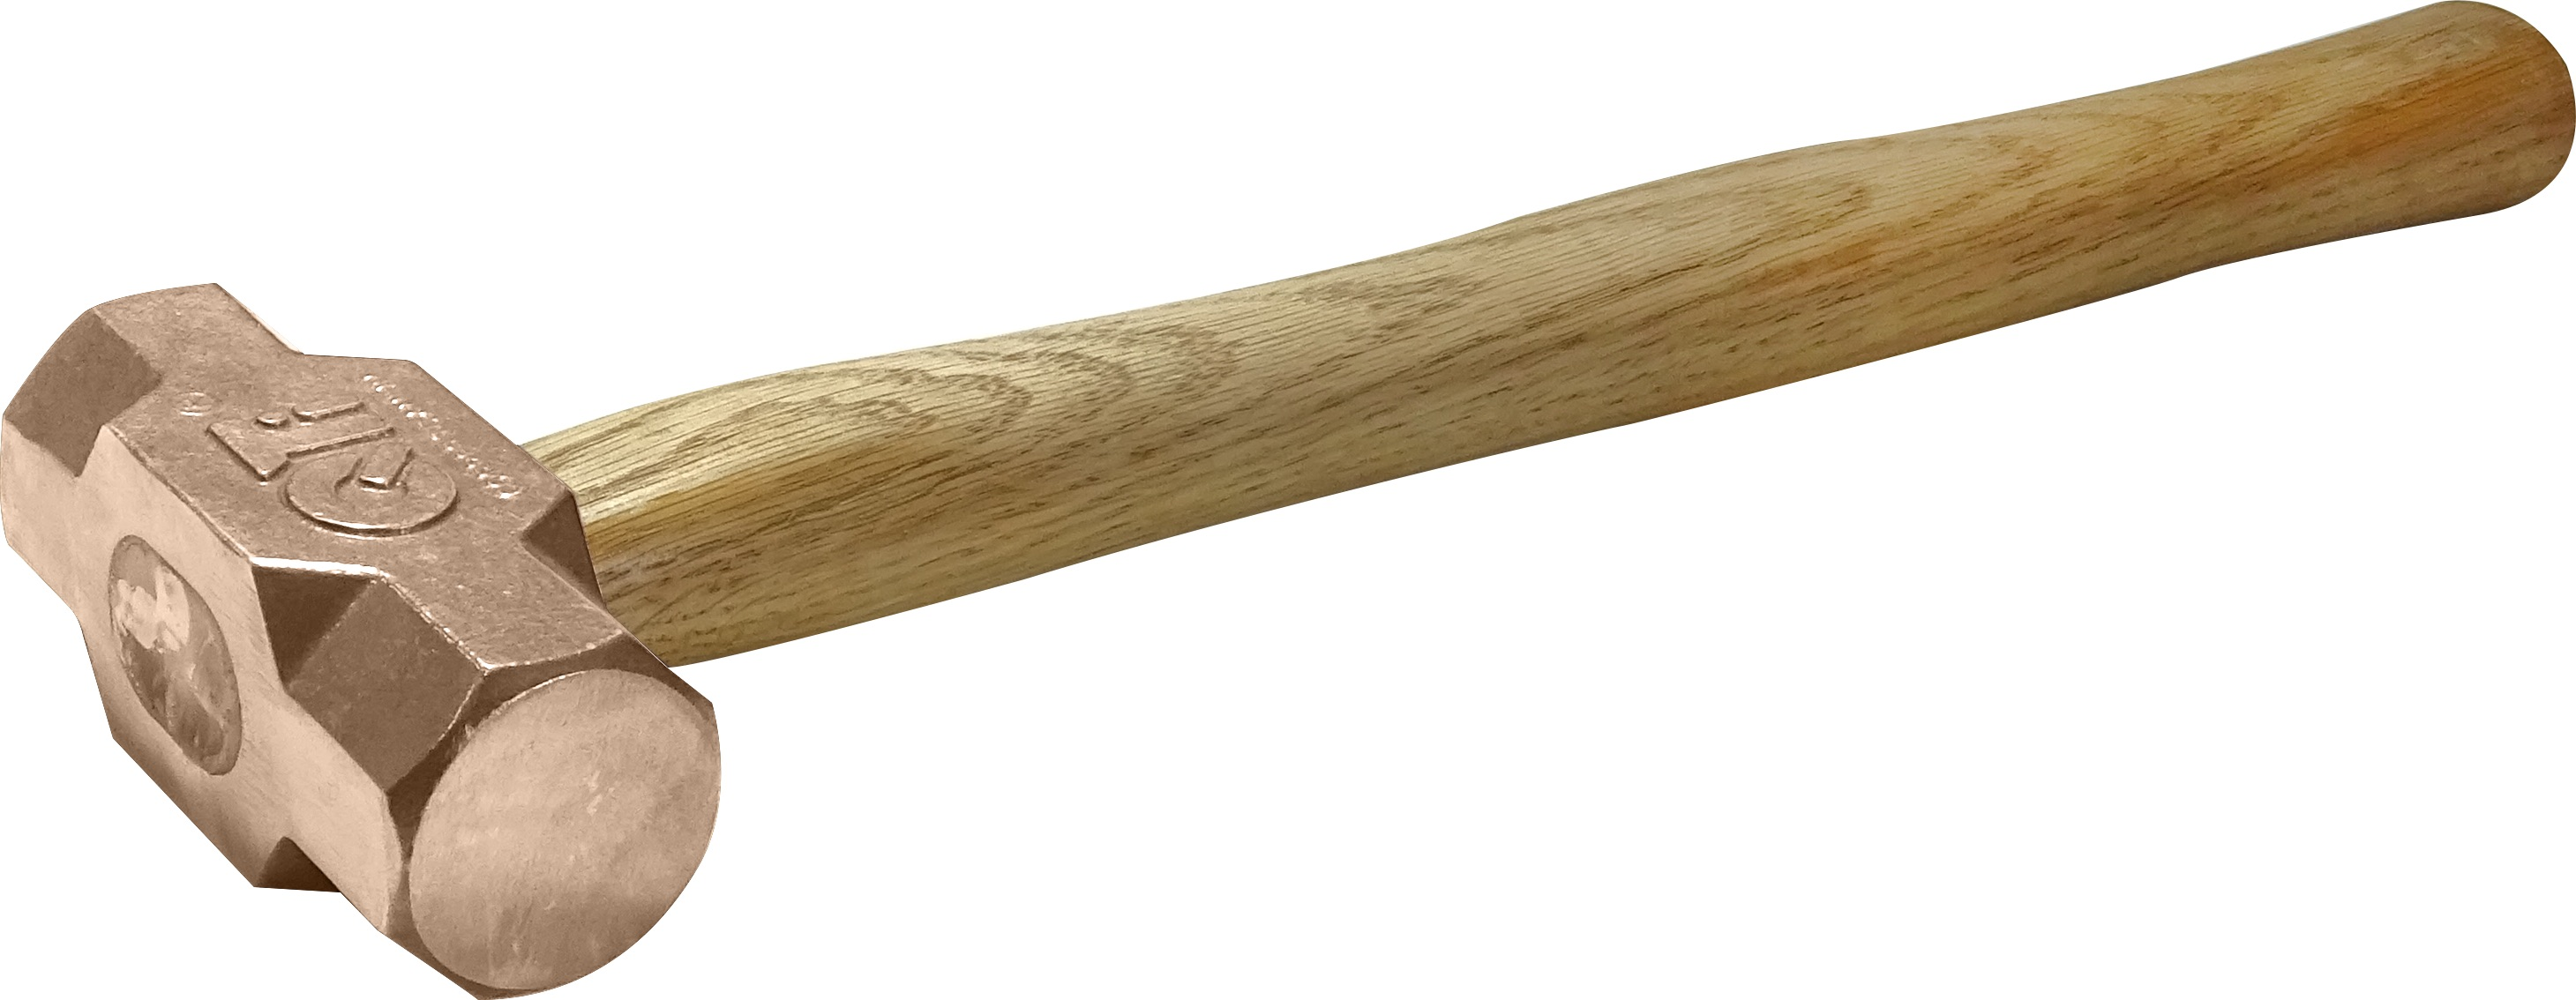 QTi® Sledge Hammer - 2000 Gms / 4 lbs (Wooden Handle)